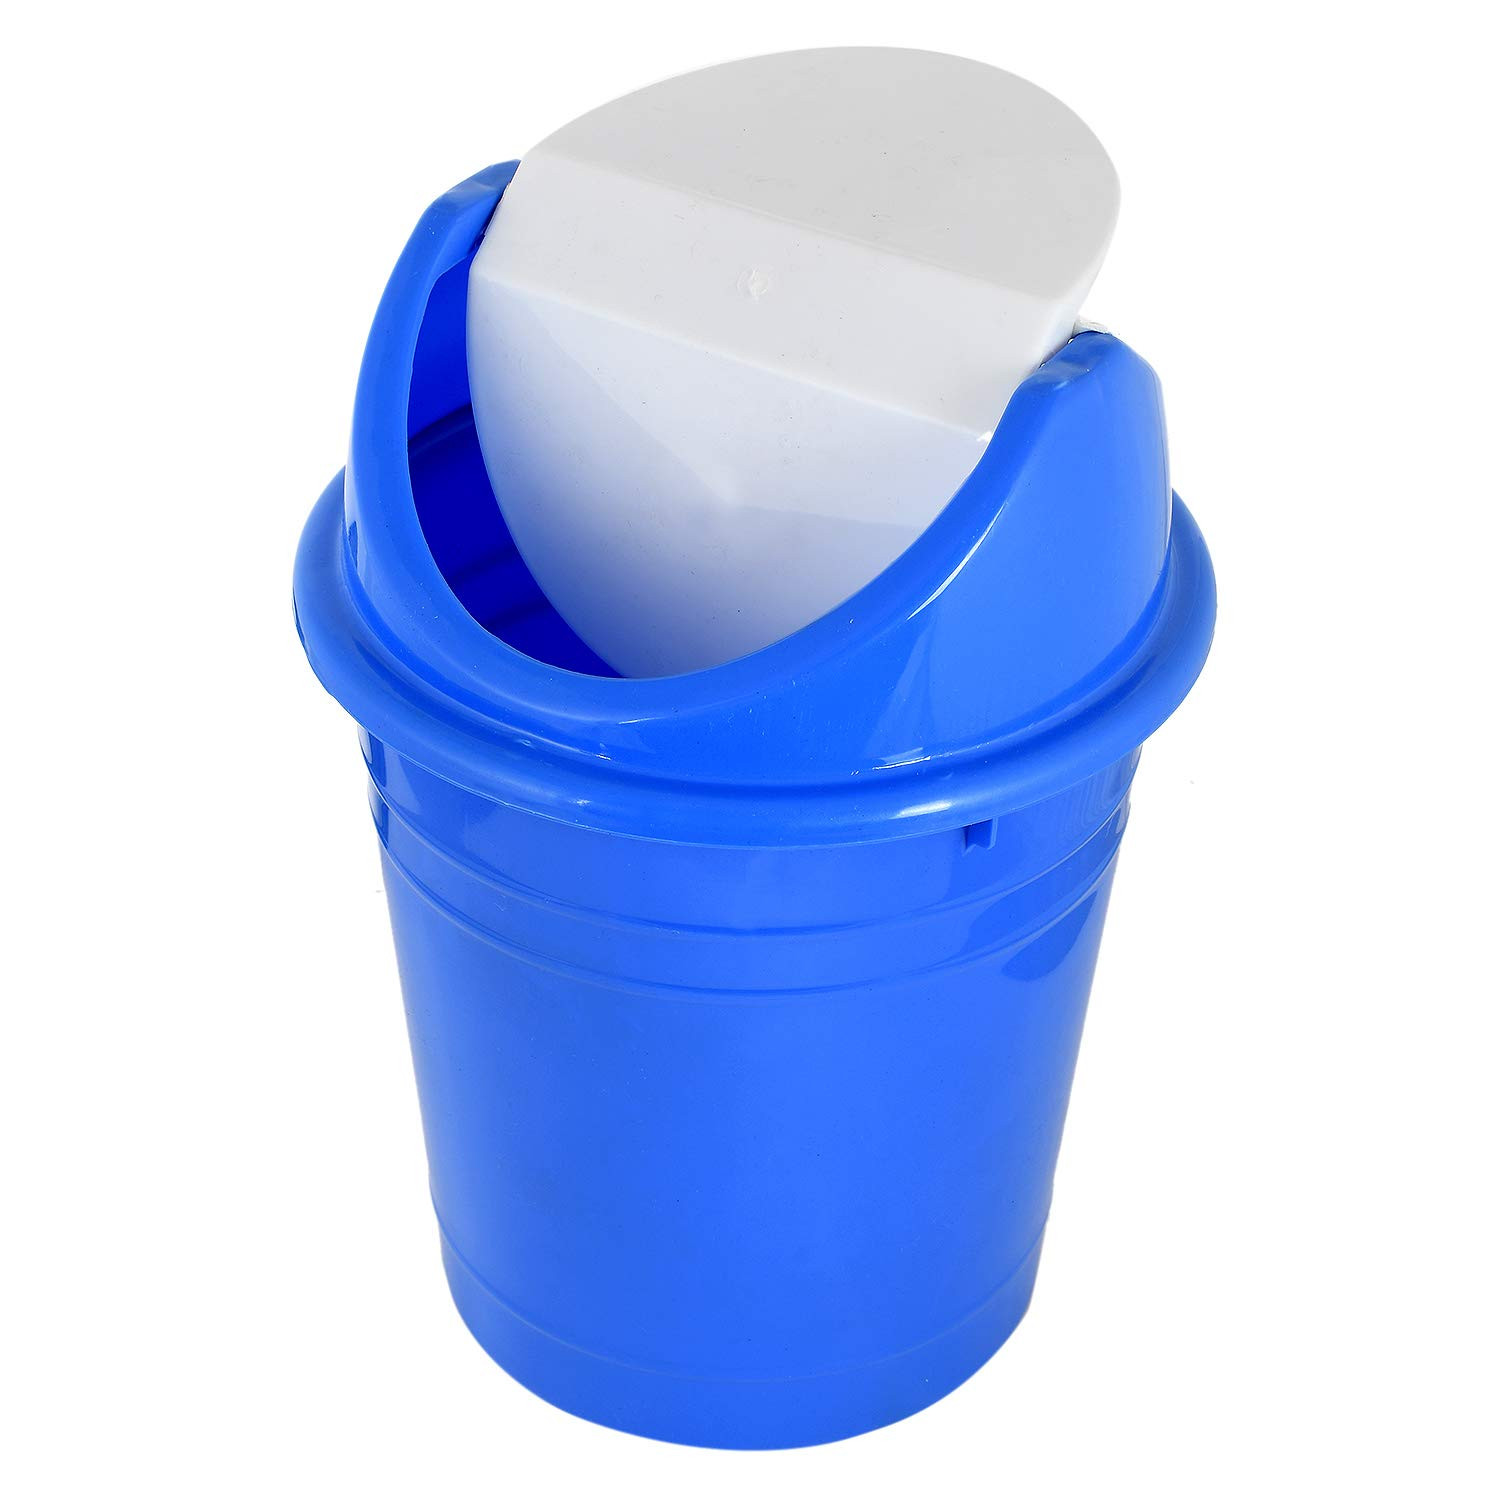 Kuber Industries Plastic 3 Pieces Medium Size Swing Dustbin/ Swing Garbage Bin/ Waste Bin, 10 Liters (Black & Blue & Red)